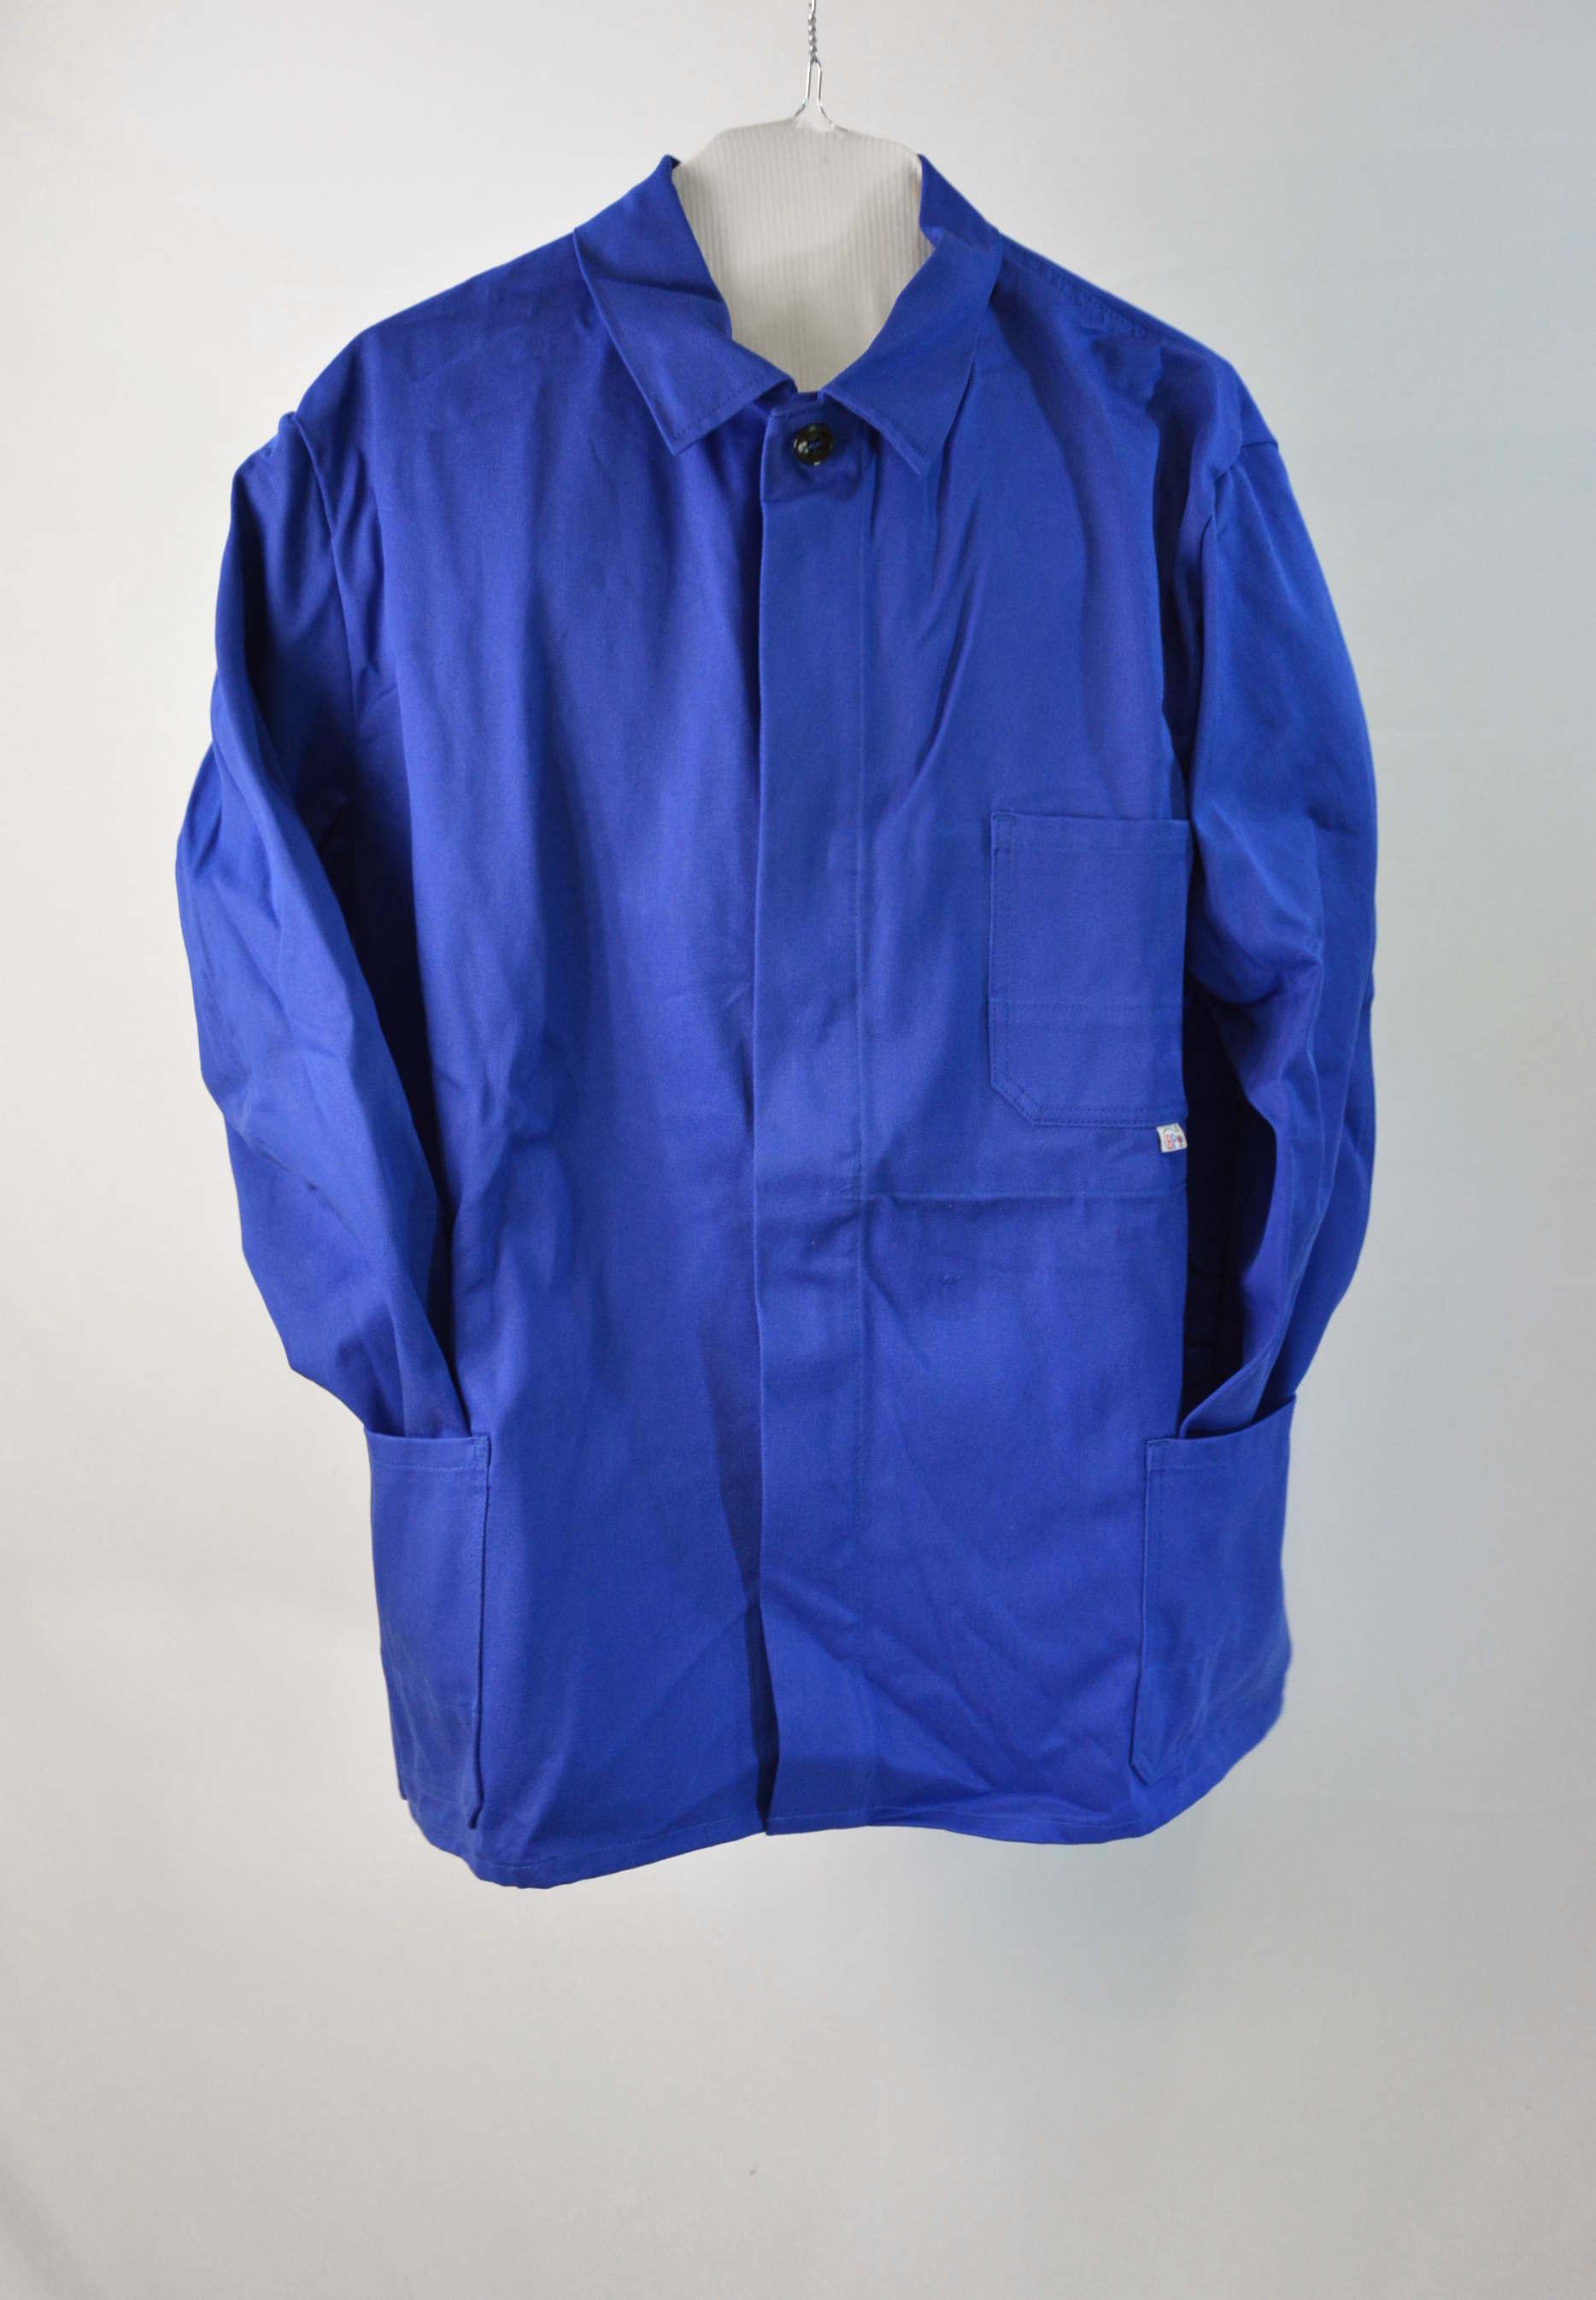 Arbeitsjacke in königsblau aus Baumwolle